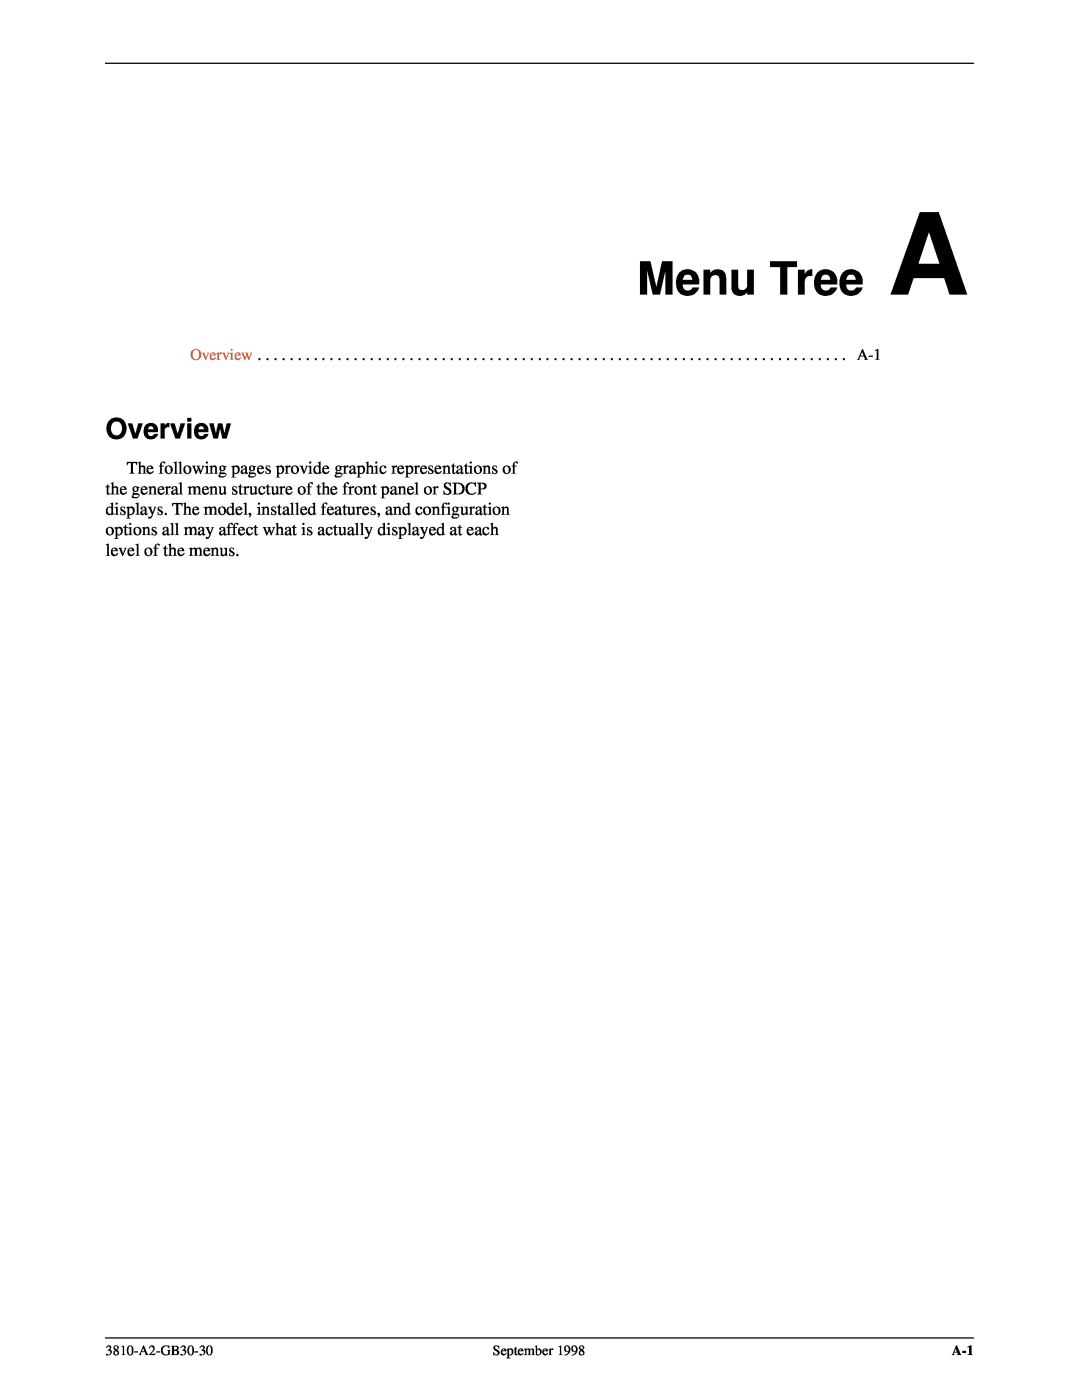 Paradyne 3800 manual Menu Tree A, Overview 